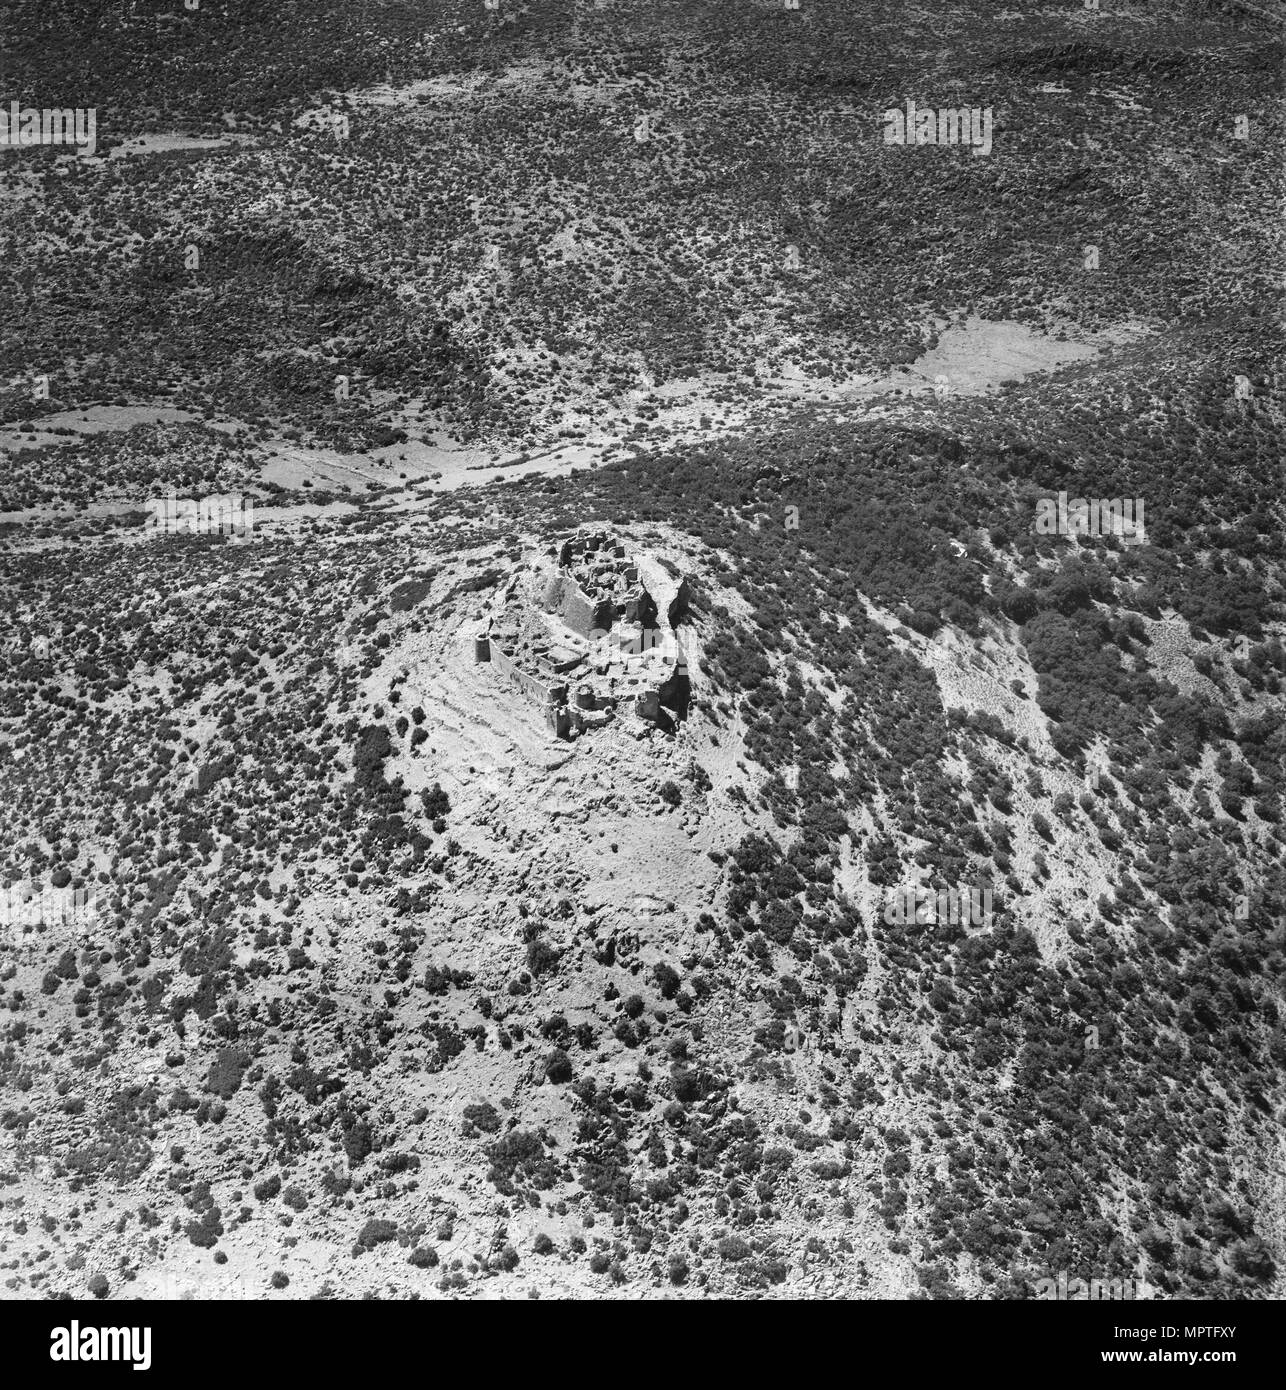 Citadel of Salah ad-Din, Lattakia, Syria, c1950s. Artist: Aerofilms. Stock Photo